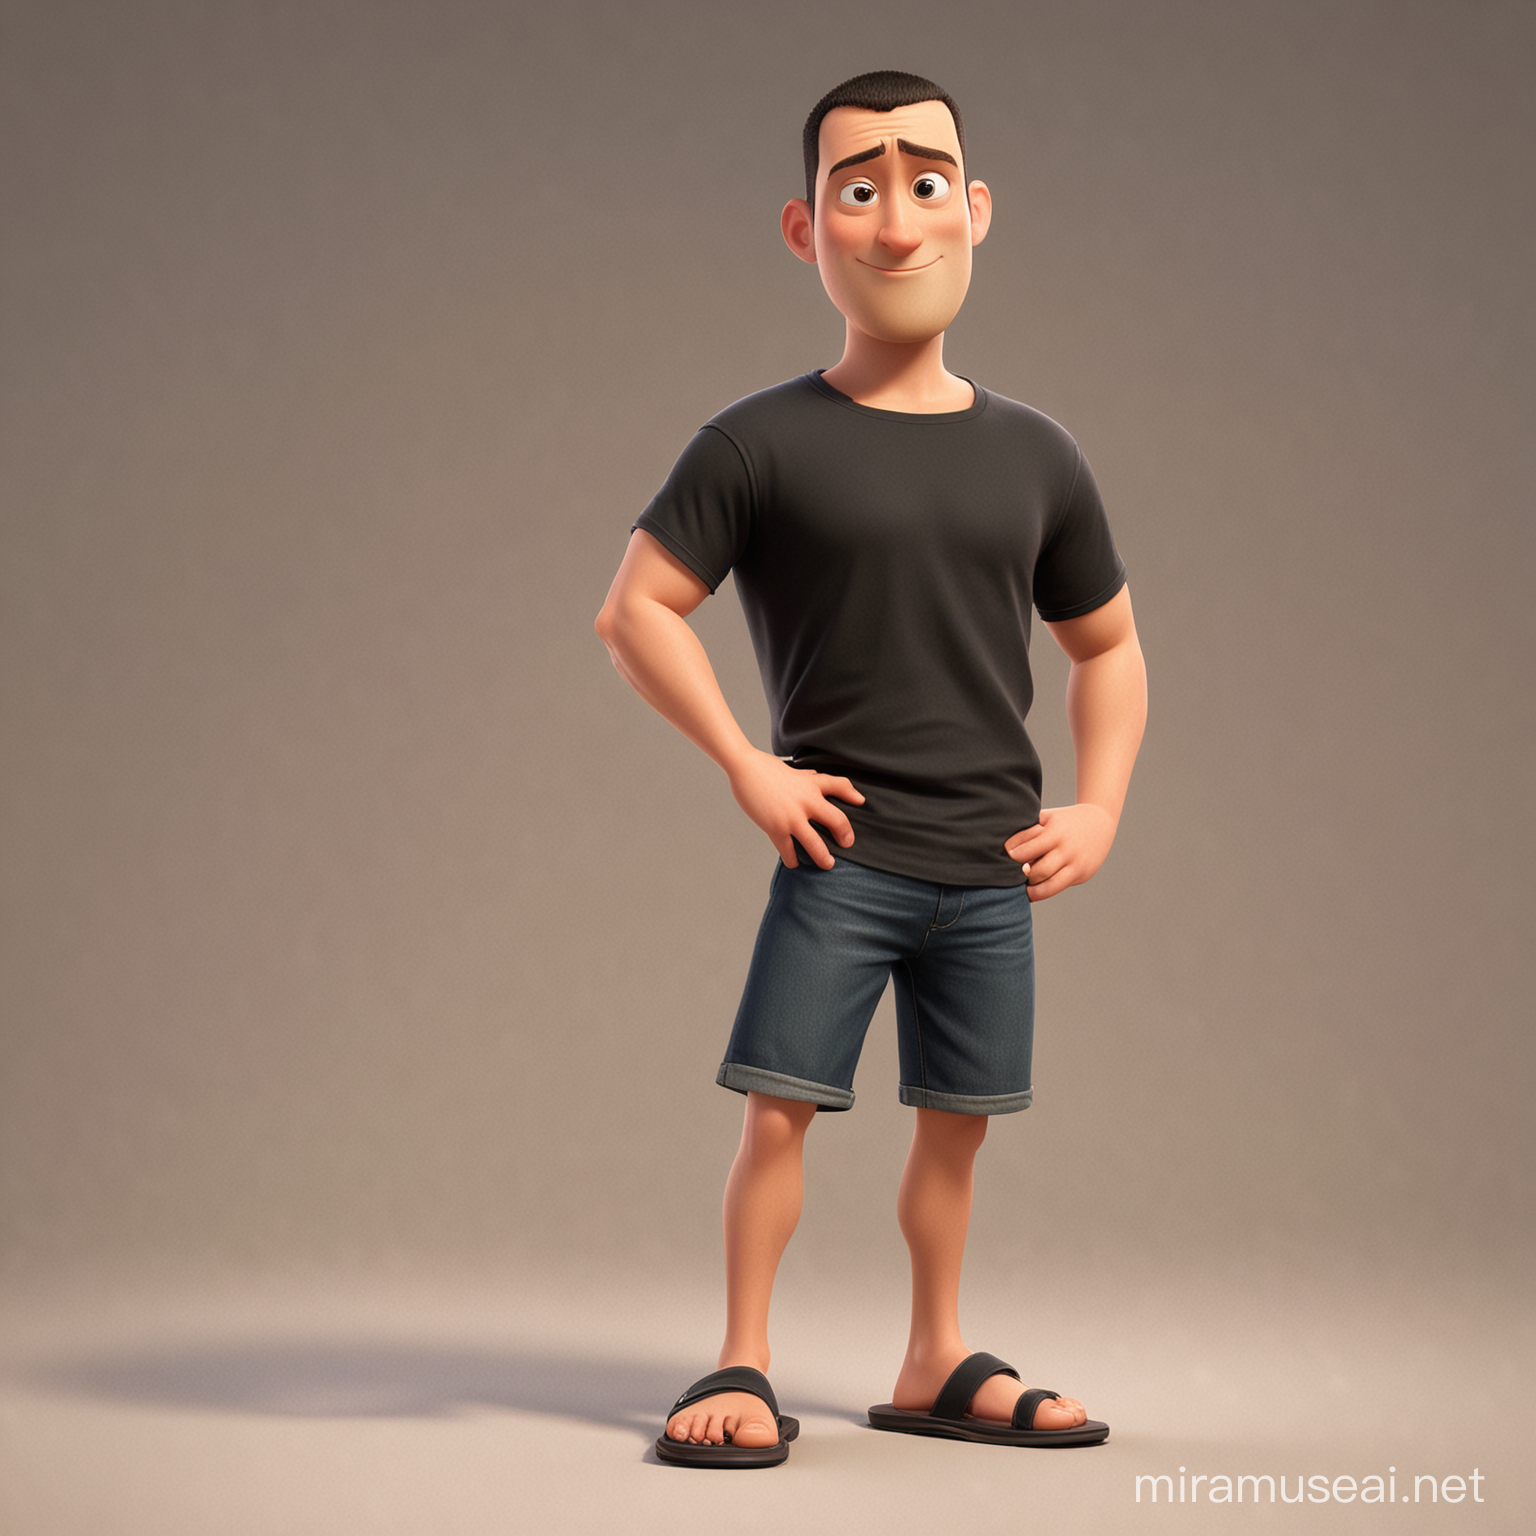 40YearOld Man in Black TShirt Pixar Style Cartoon Characters